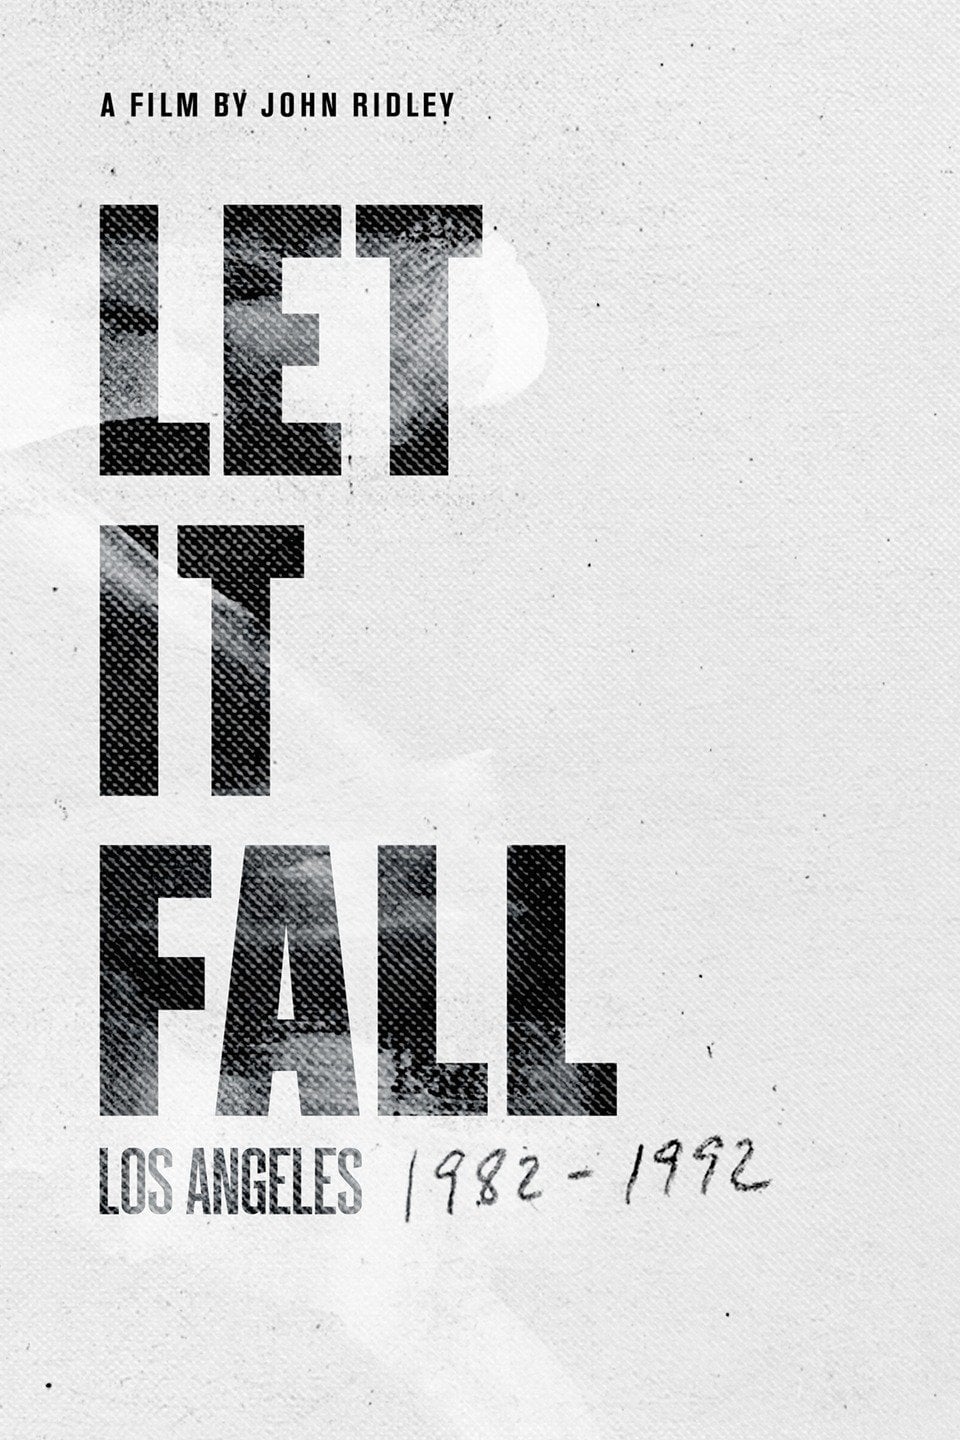 Let It Fall: Los Angeles 1982-1992 film